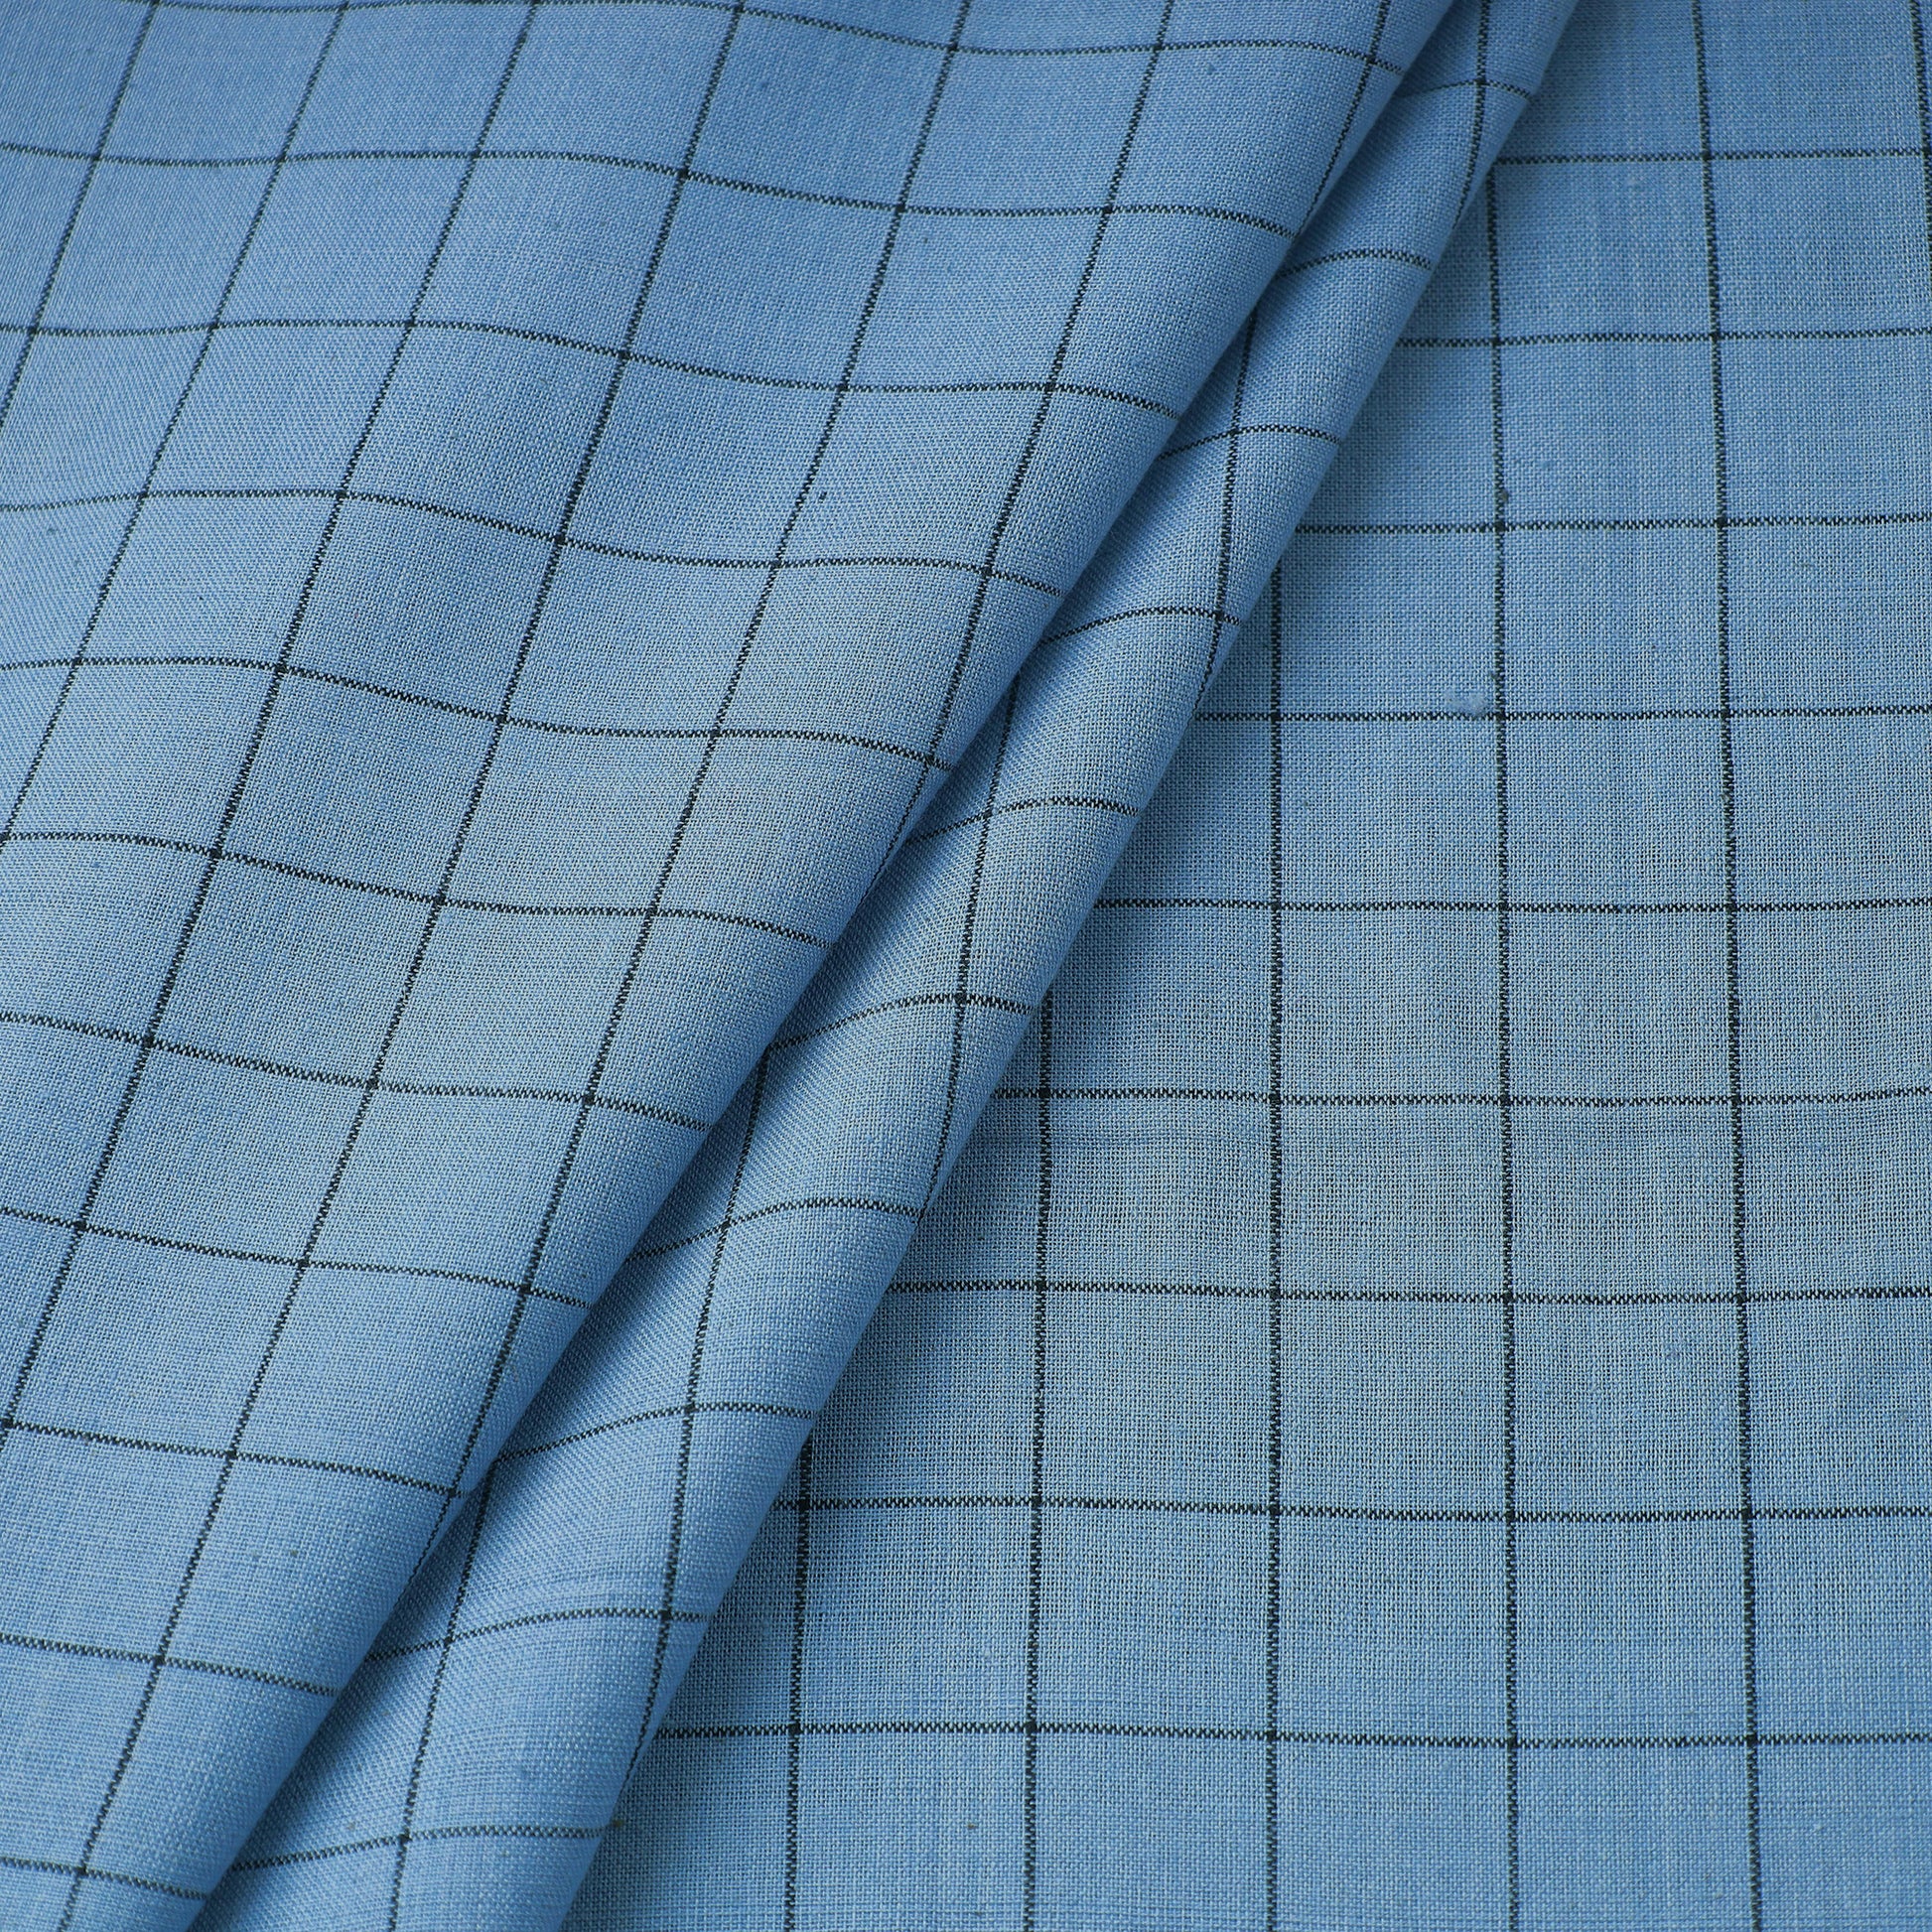 Baragaon Pre Washed Handloom Striped Cotton Fabric